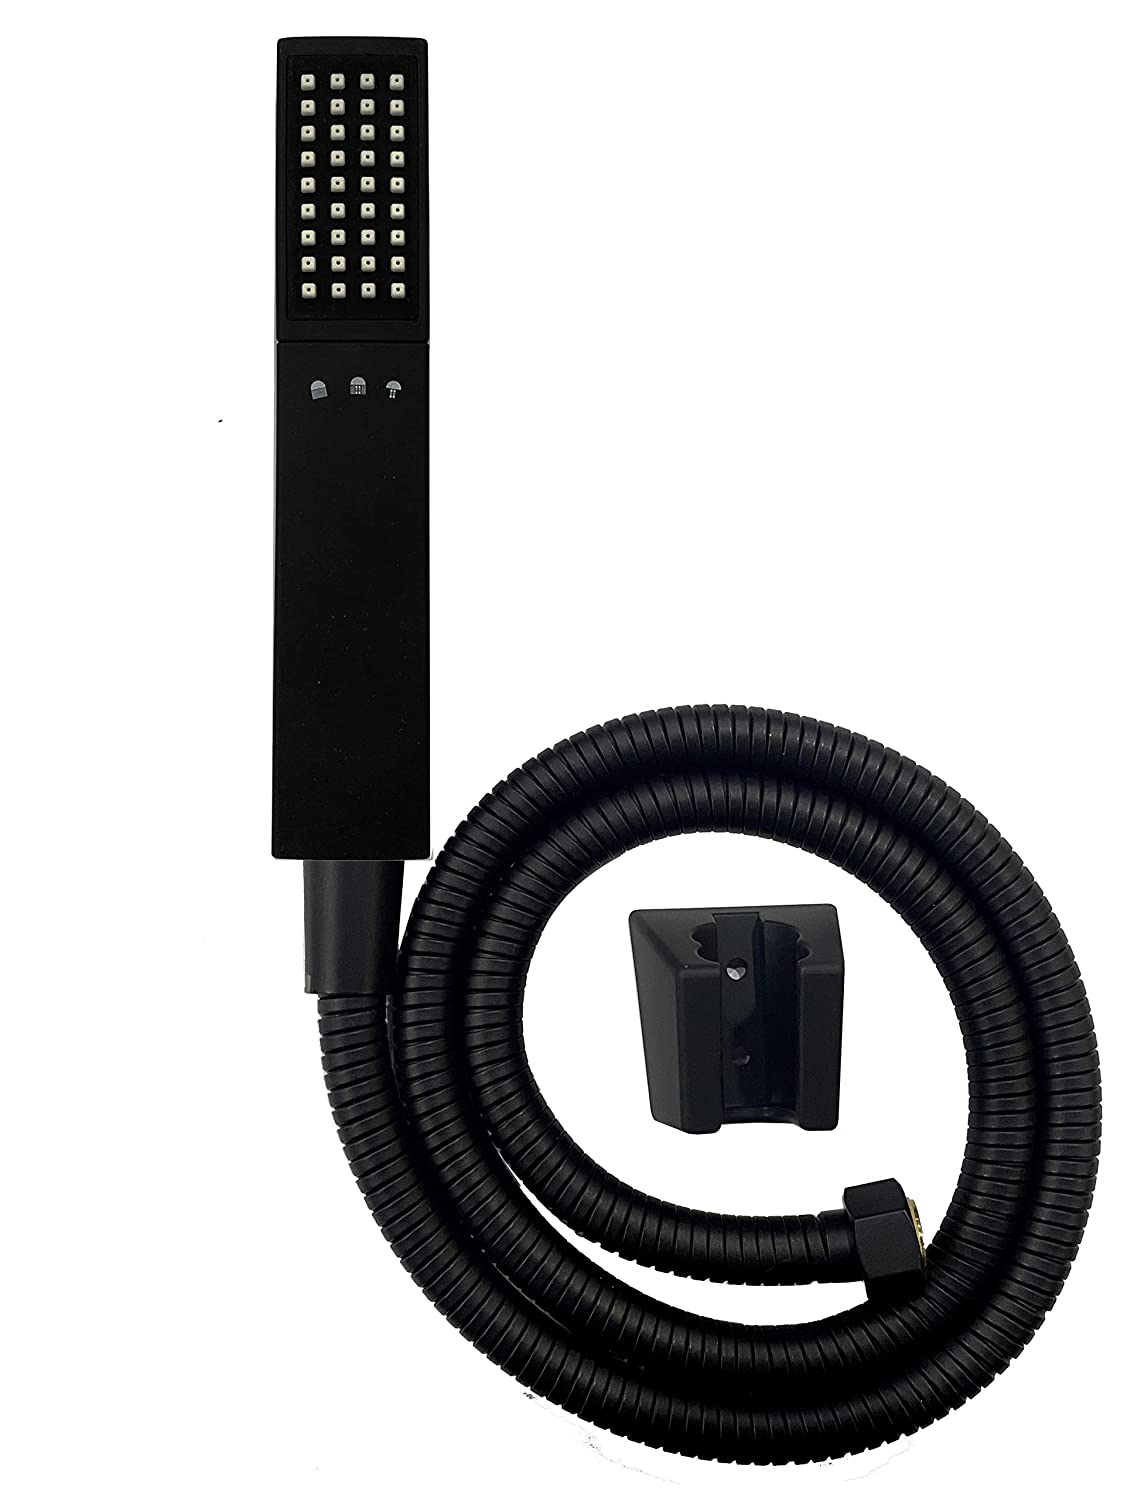 Aquieen 3 Function Hand Shower Black with SS 304 Black Shower Tube & Wall Hook (Quadro Black)